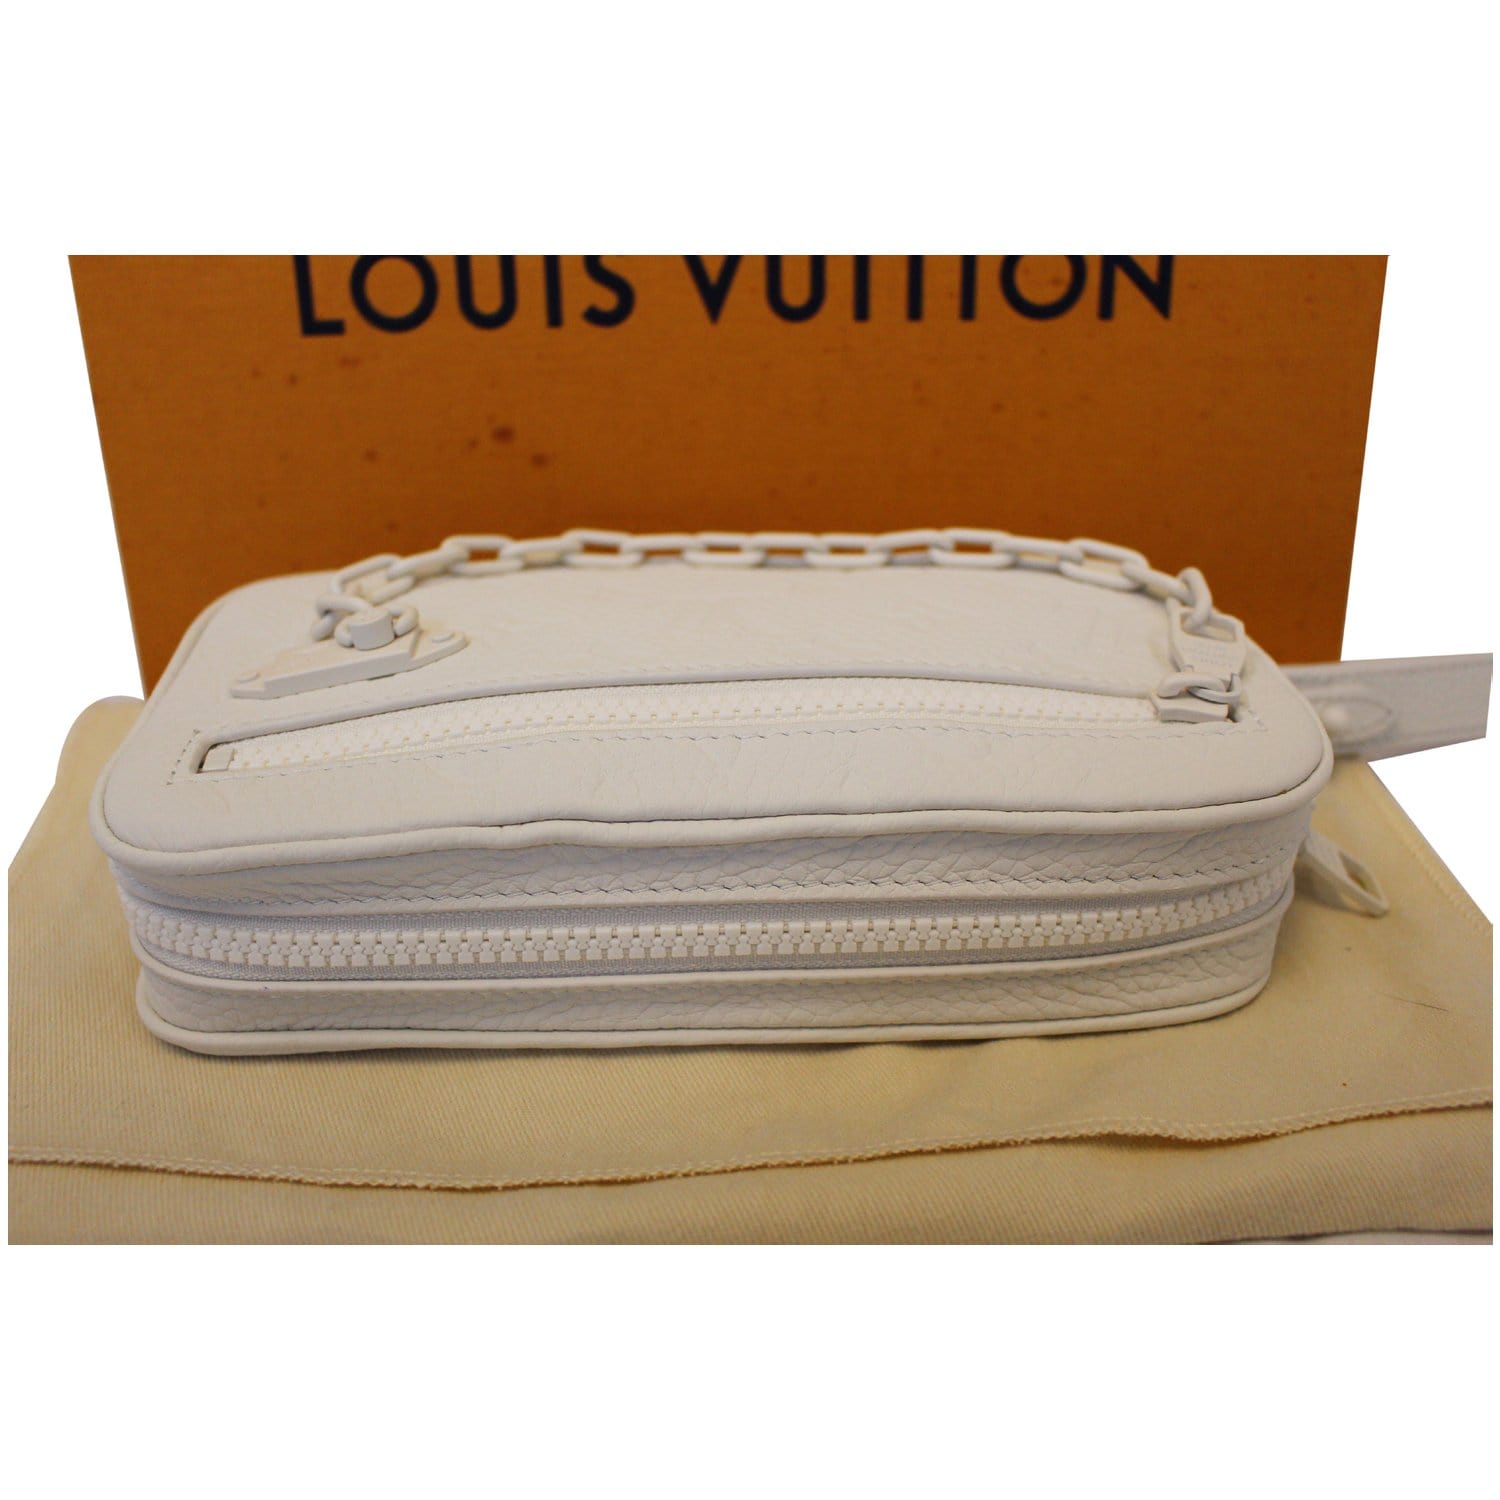 Louis Vuitton Pochette Volga Powder White Clutch Bag M53551 Free